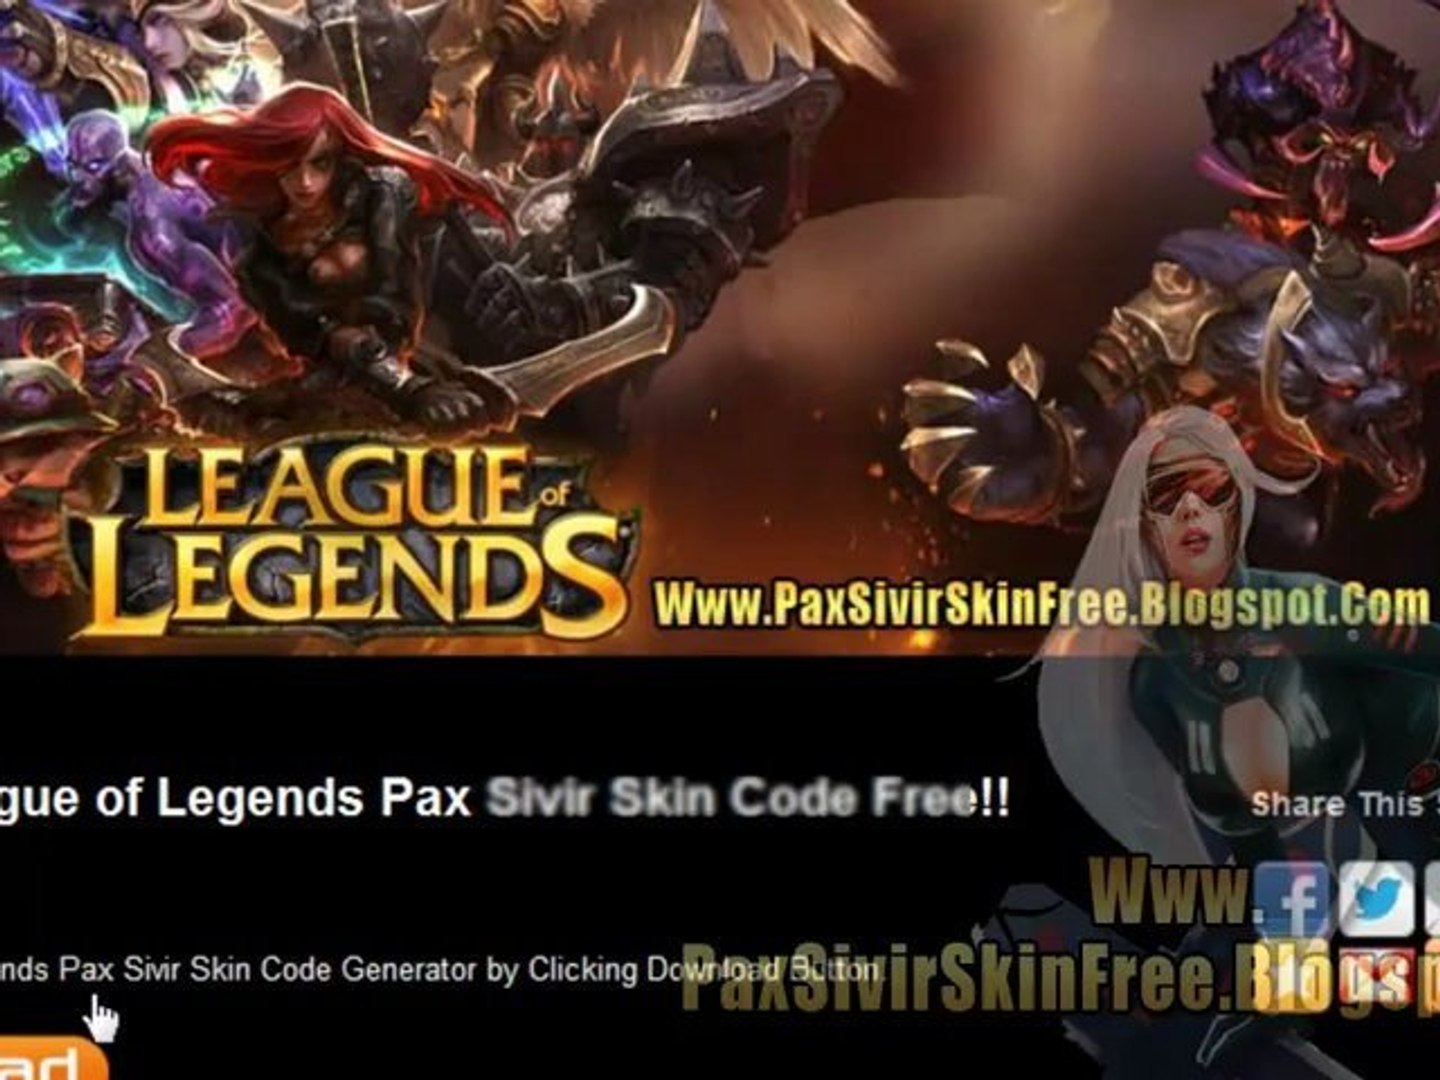 How to Get League of Legends Pax Sivir Skin Code Free - video ...